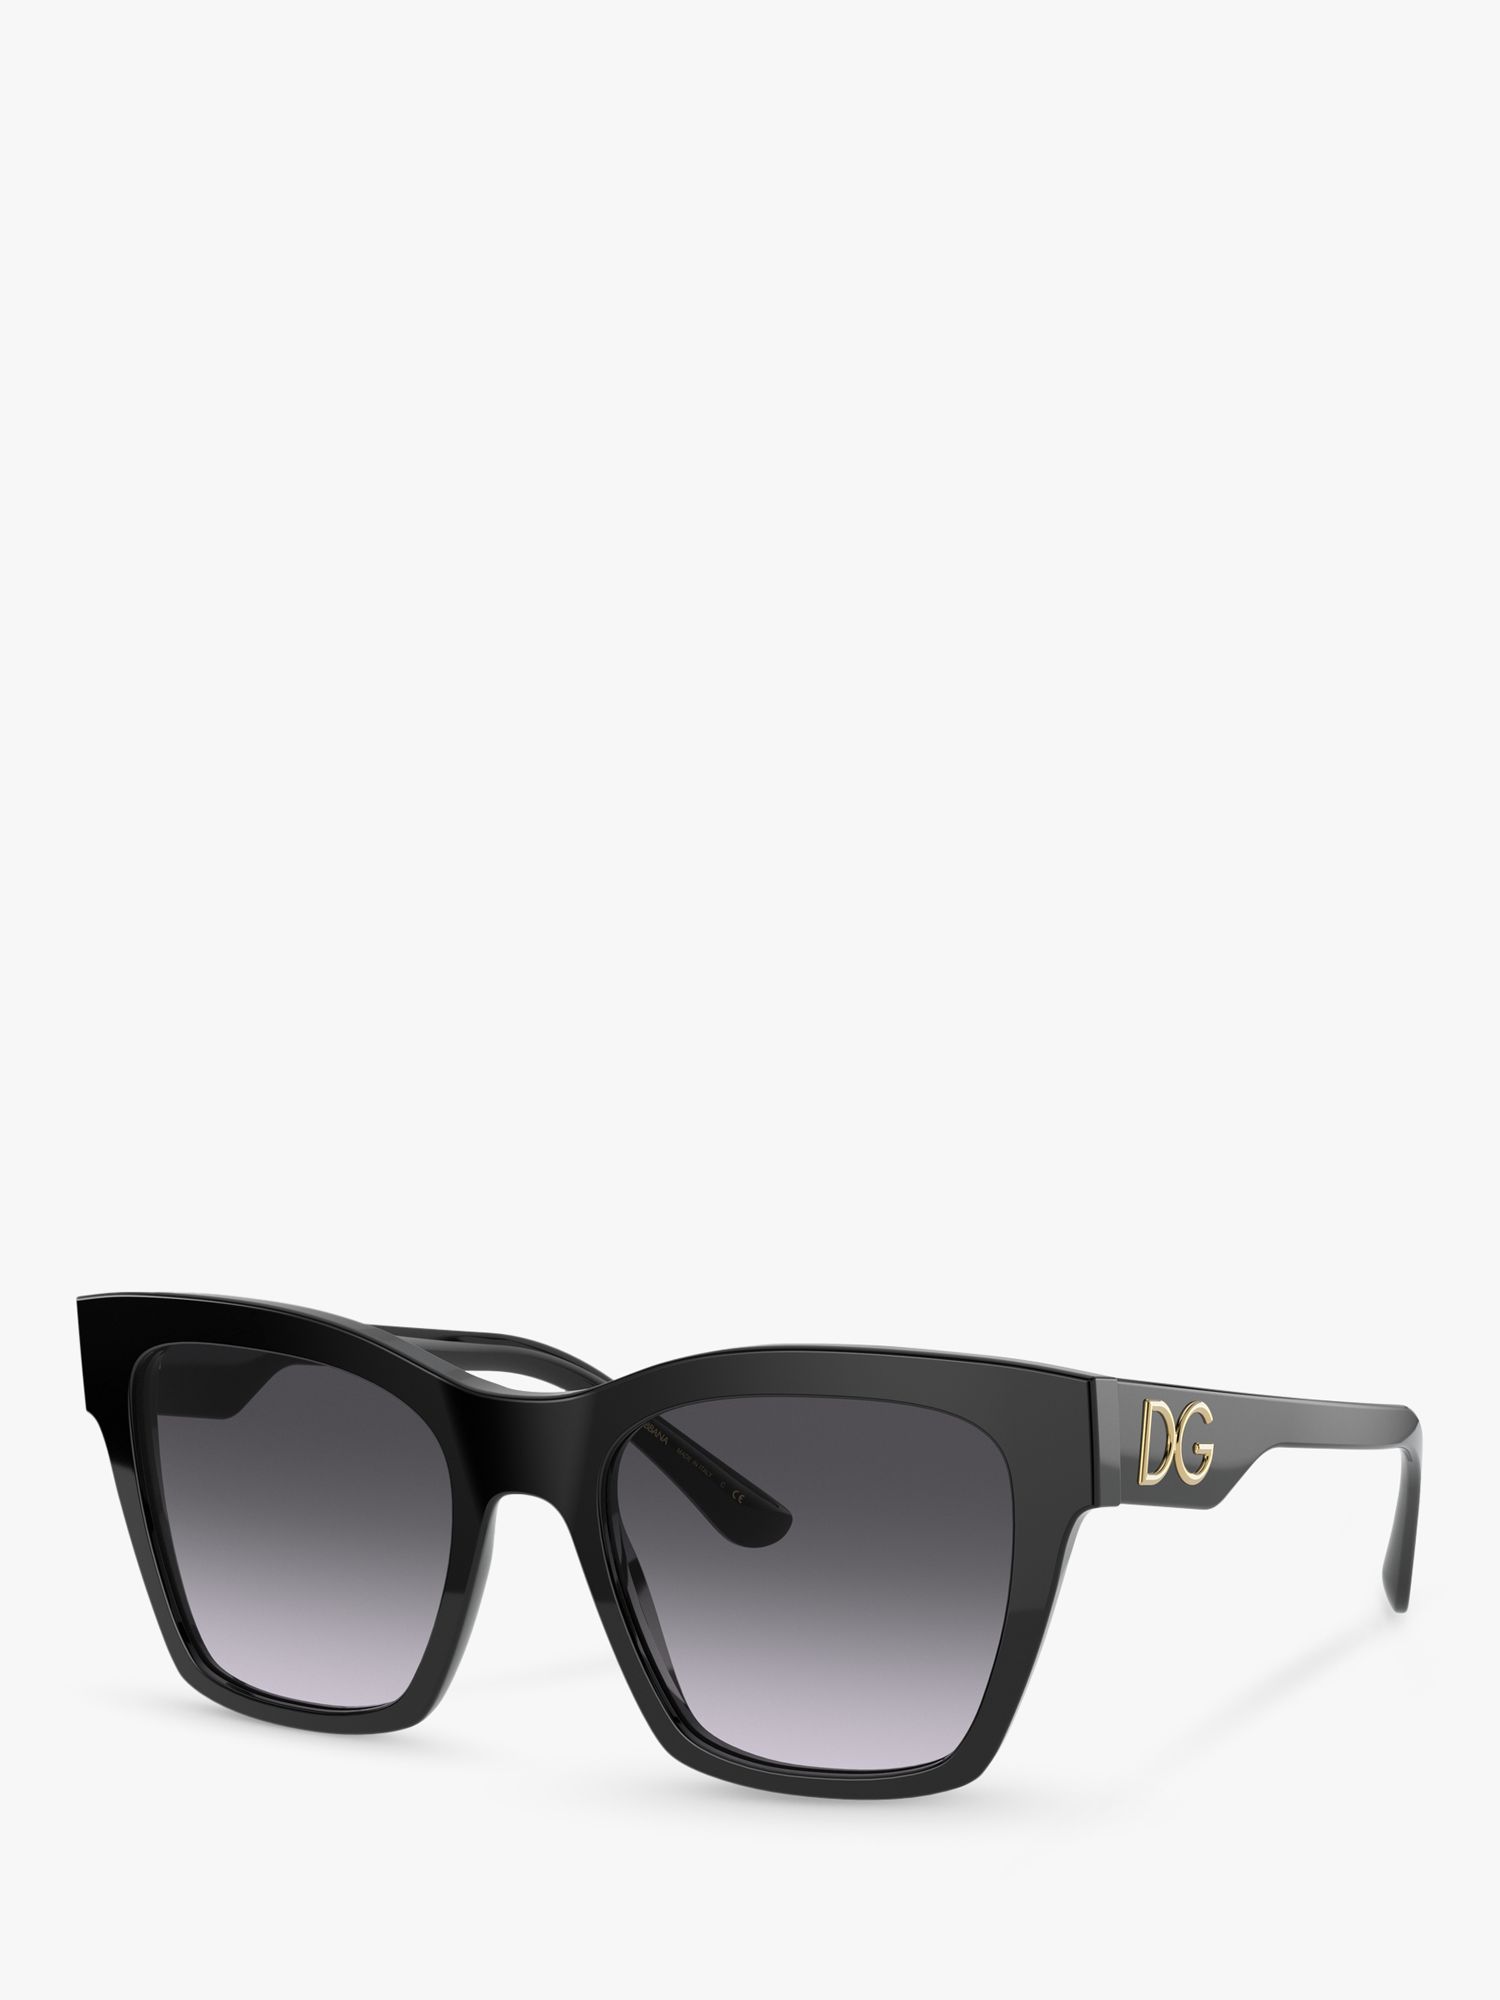 Dolce And Gabbana Dg4384 Womens Square Sunglasses Blackgrey Gradient